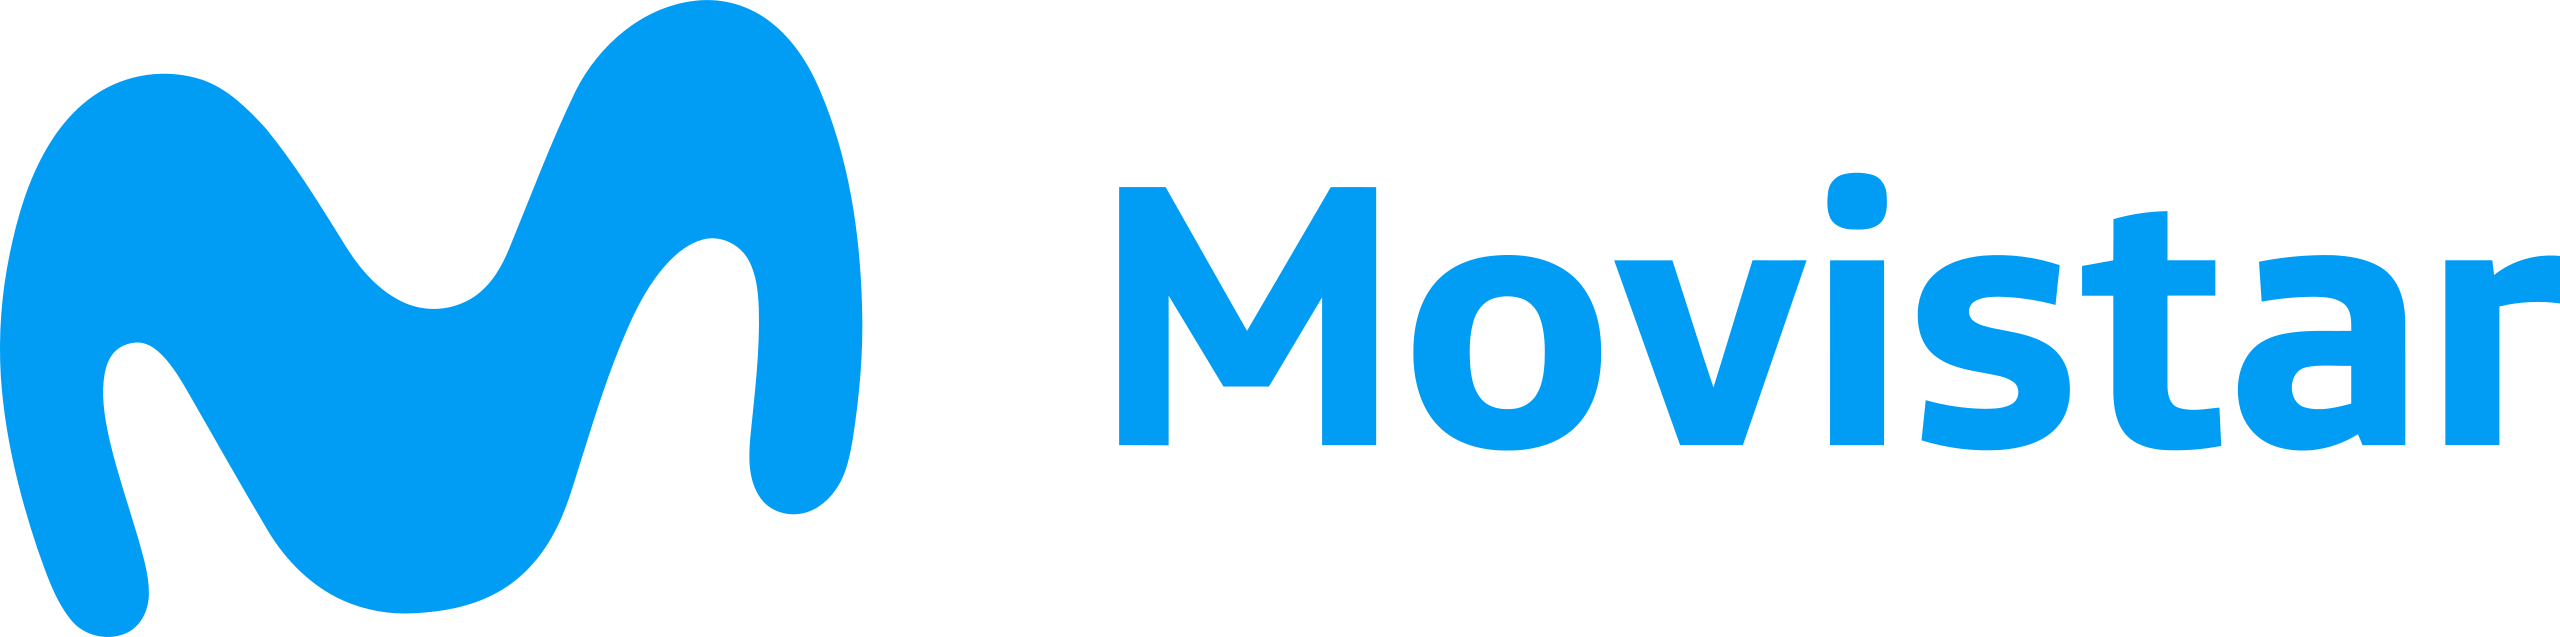 Movistar_2020_logo.svg.png